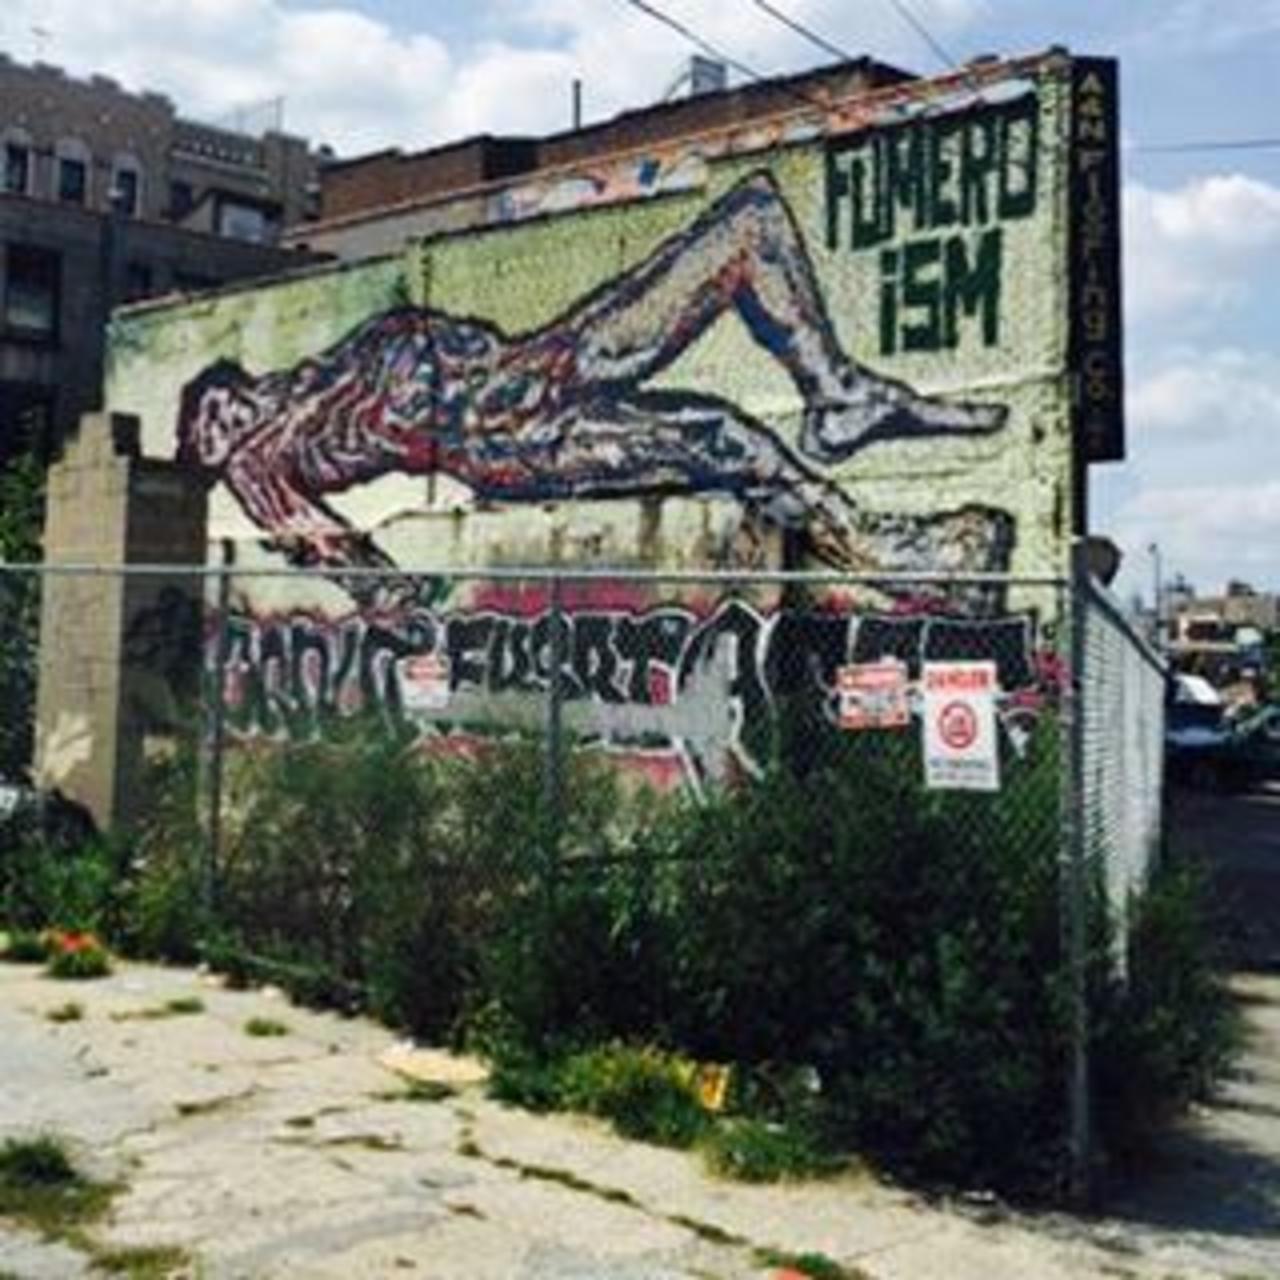 Old school #streetart #mural #painting #walls #graffiti #fumeroism #brooklyn #nyc #newyorkcity #nycstreetart #stree… http://t.co/OgGFXVMS5C